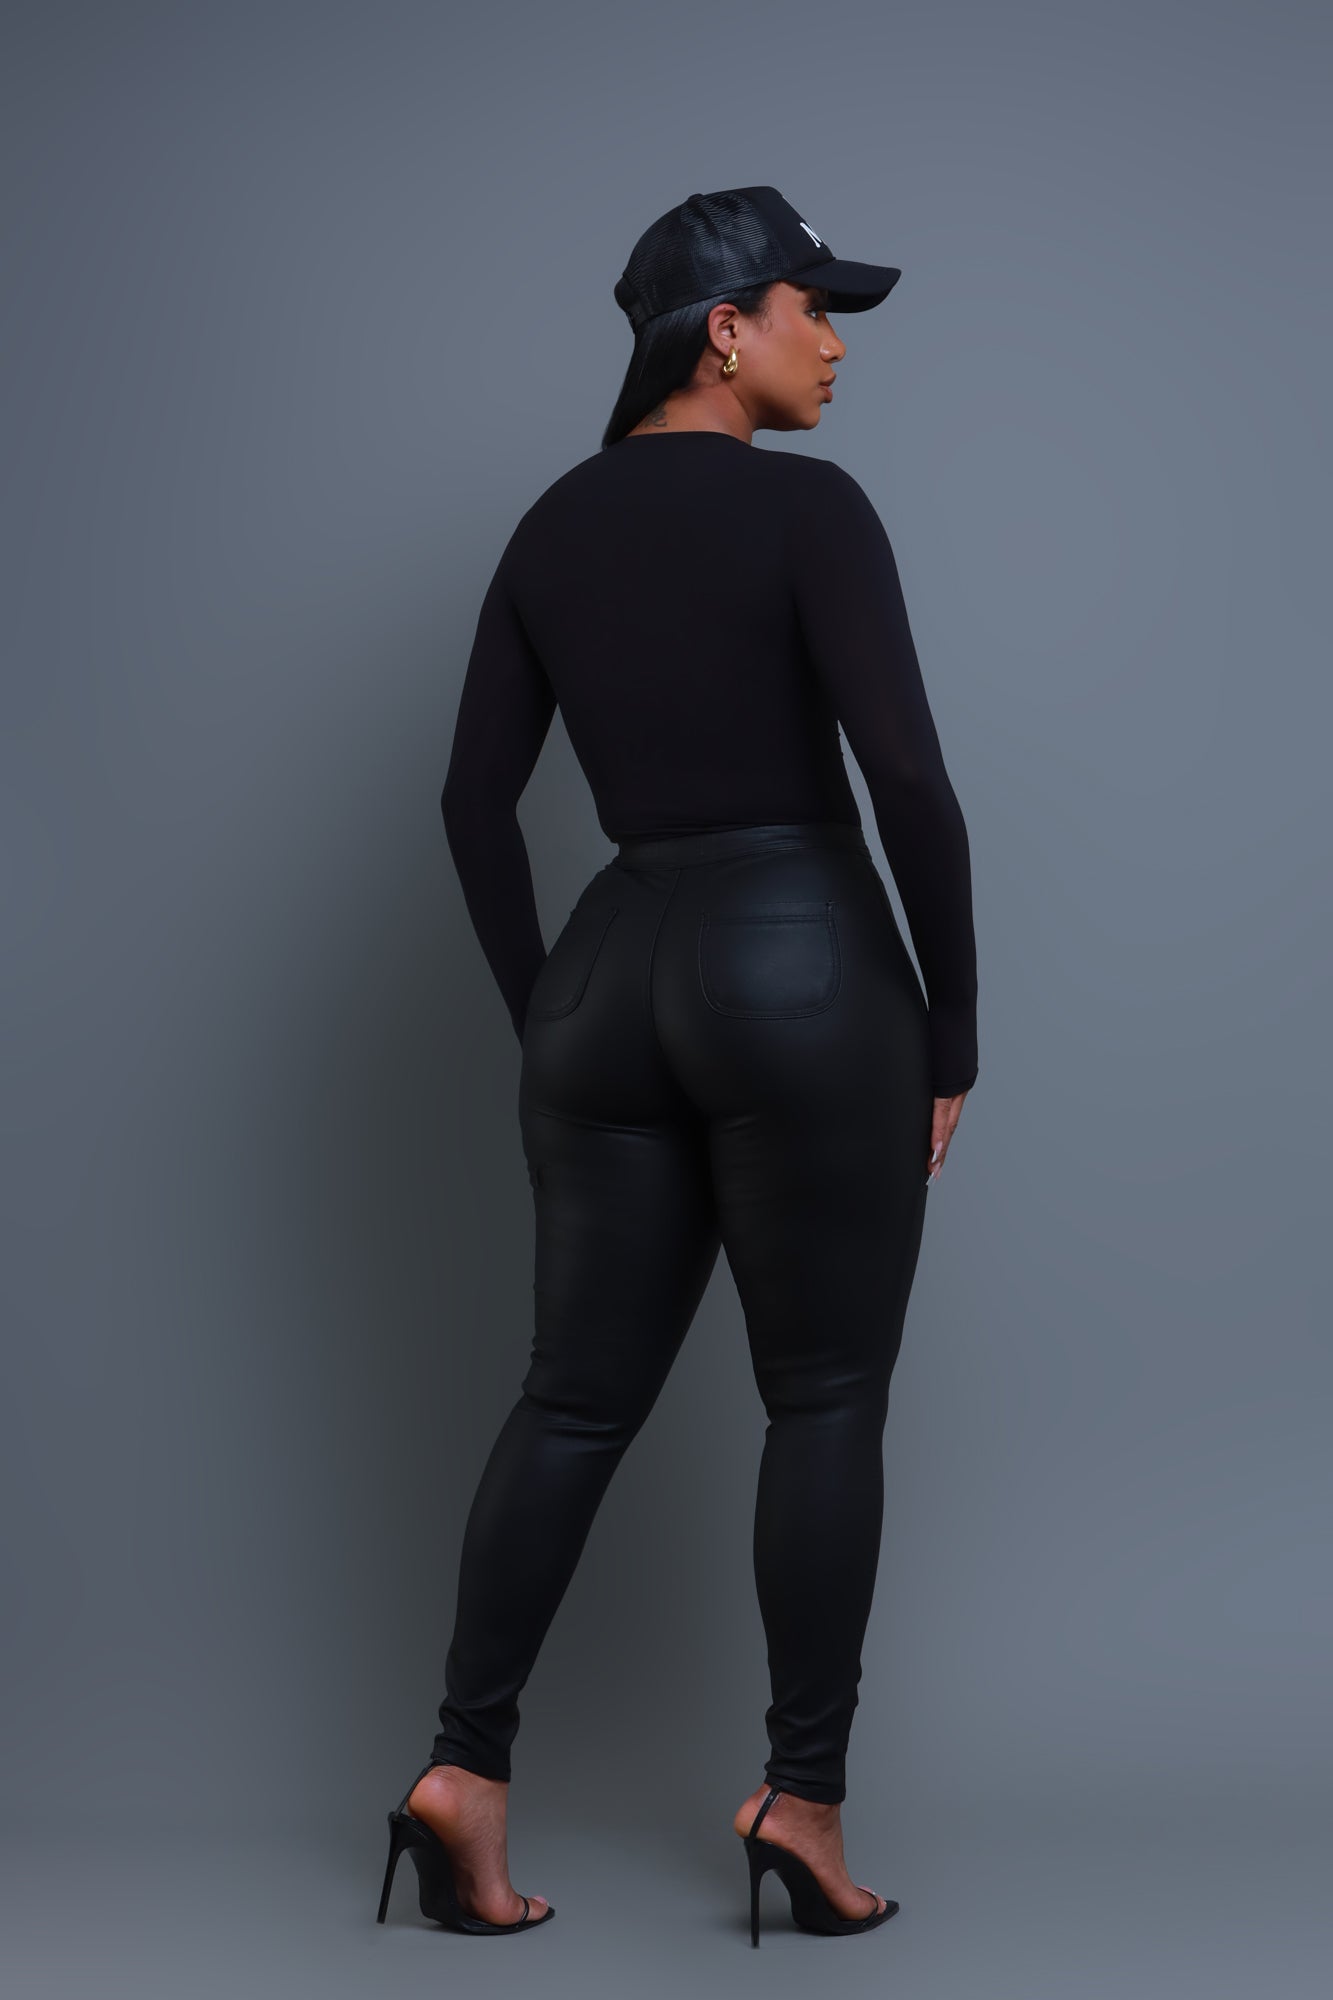 Women's Black Leather Pants